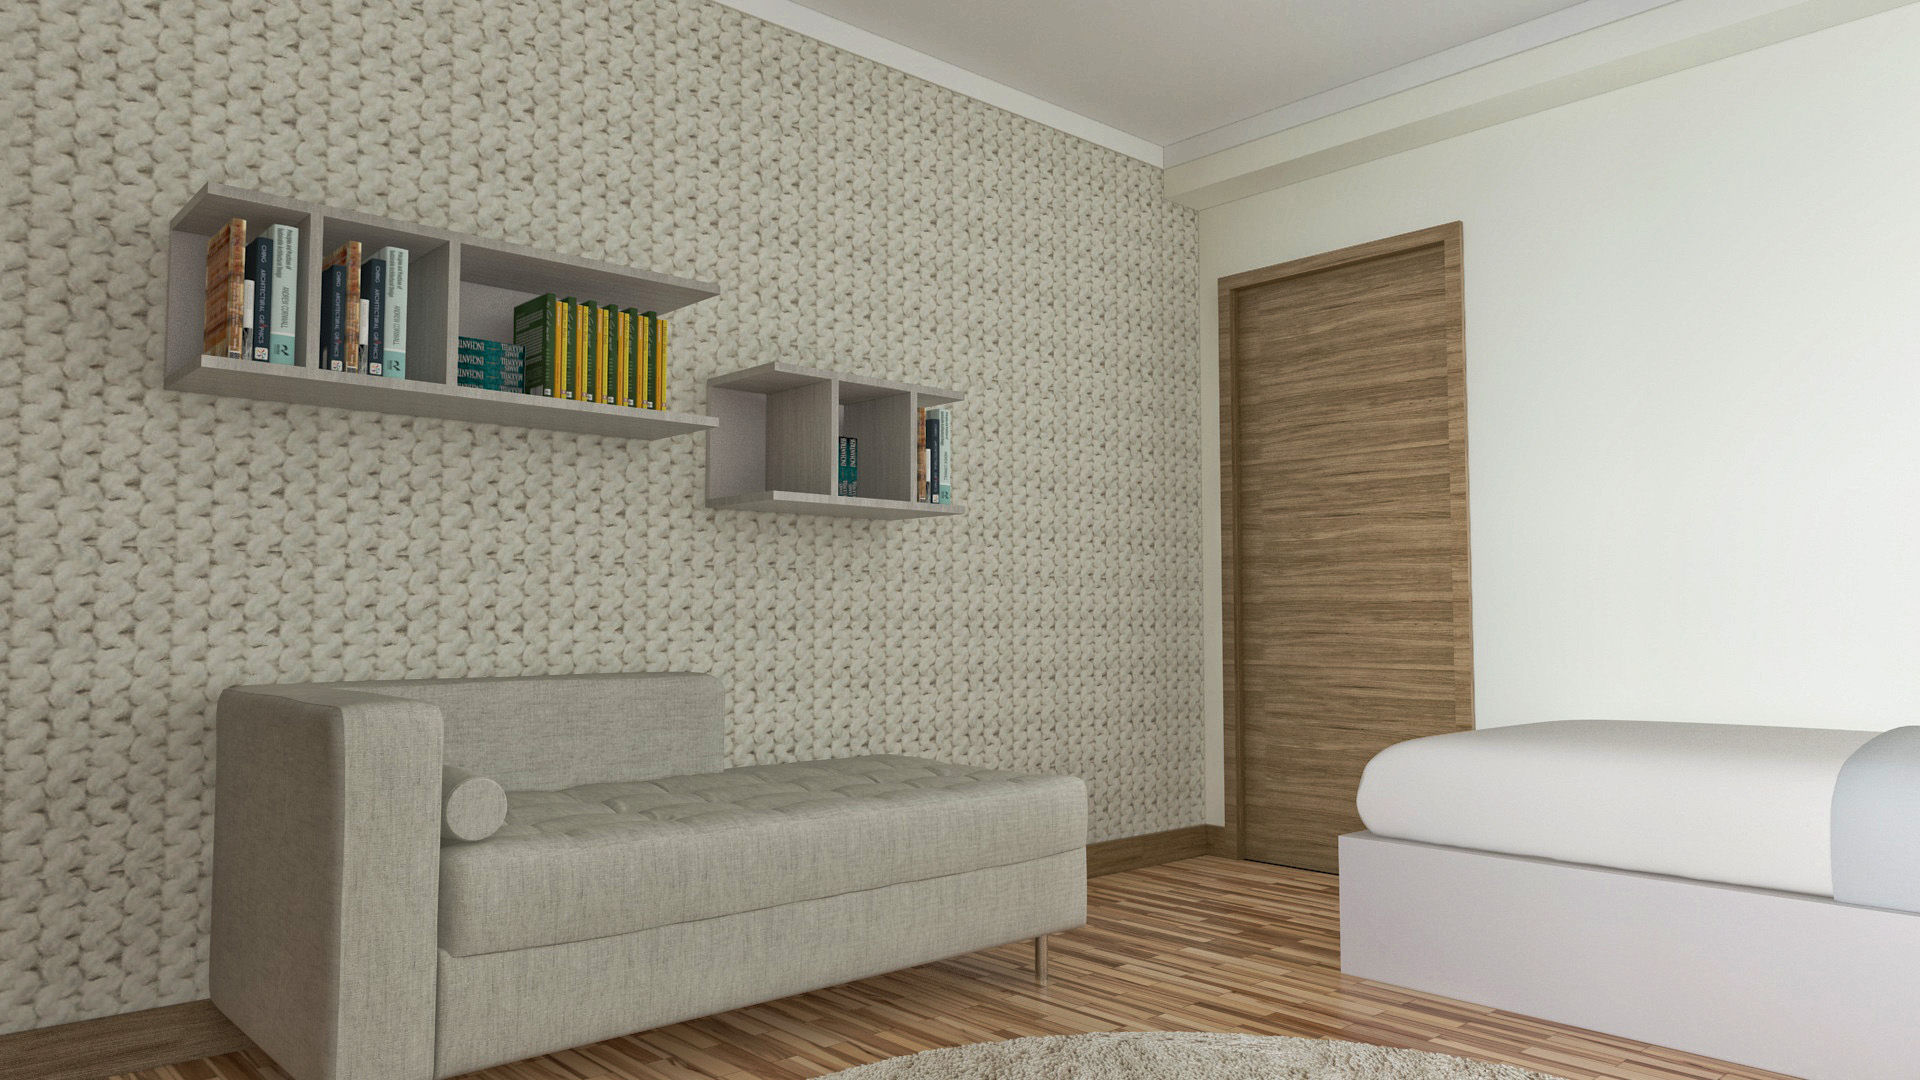 PROJETOS: 3D, INTERDOBLE BY MARTA SILVA - Design de Interiores INTERDOBLE BY MARTA SILVA - Design de Interiores Kamar Tidur Klasik